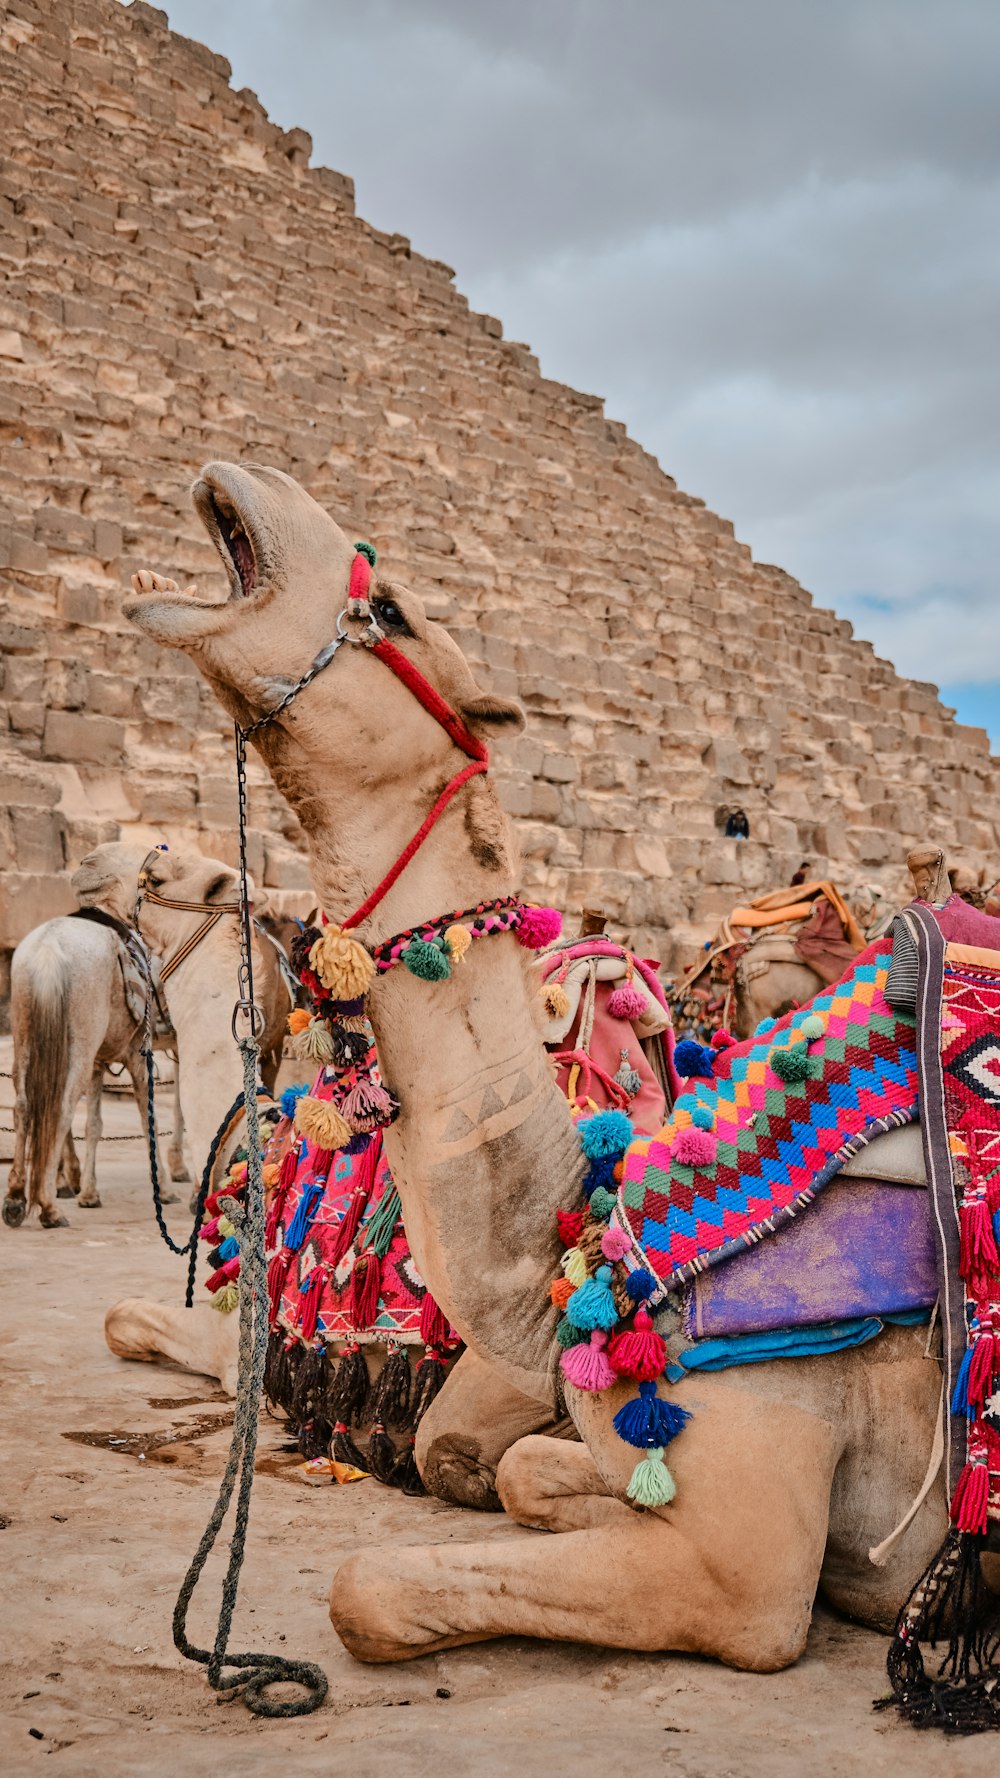 camel sitting on ground near pyramid during daytime